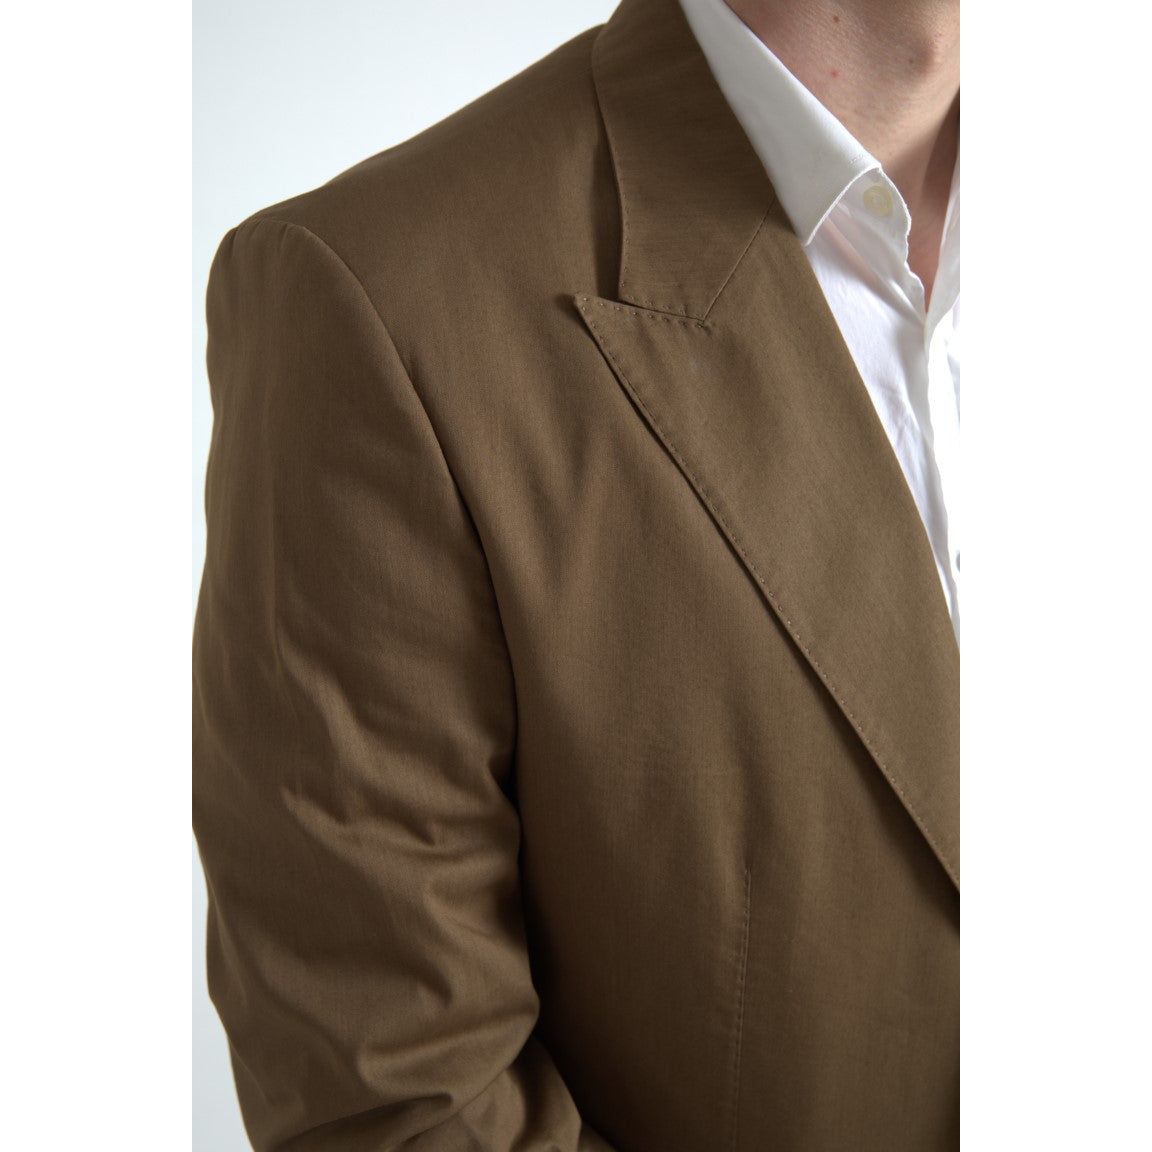 Dolce & Gabbana Elegant Brown Silk Blend Taormina Suit brown-2-piece-single-breasted-taormina-suit 465A8672-Medium-8dc9f289-08a.jpg